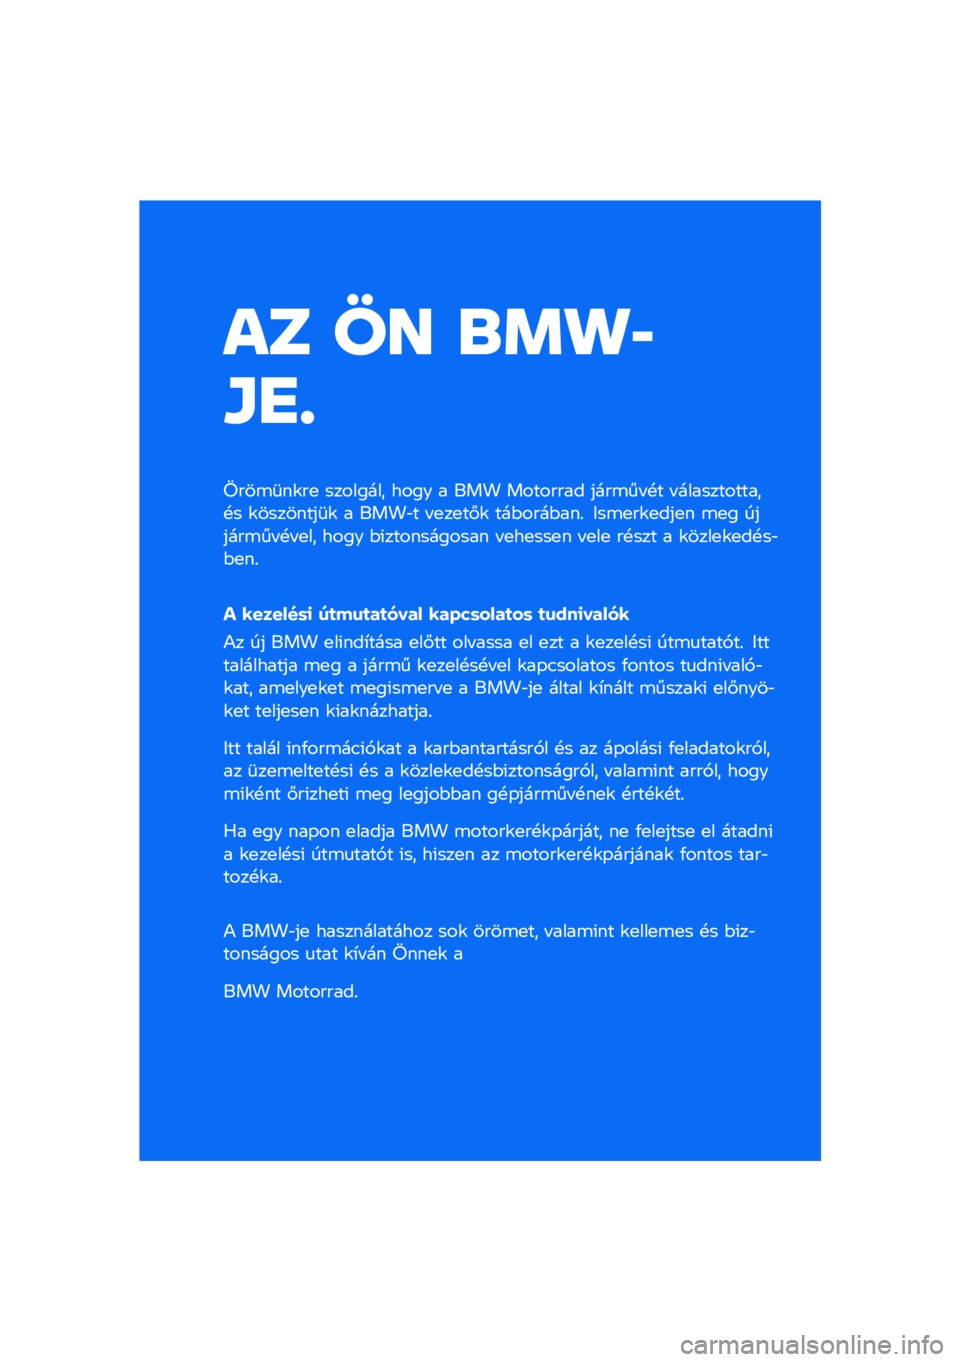 BMW MOTORRAD C 400 GT 2021  Kezelési útmutató (in Hungarian) �� �� �\b�	�
�
�\f�
�
����\b�	��\f��
 �������� ���� � ��� �������� ����\b�� �!� � ������������!� �\f��������	�\f � ����"� � �
��
��#�\